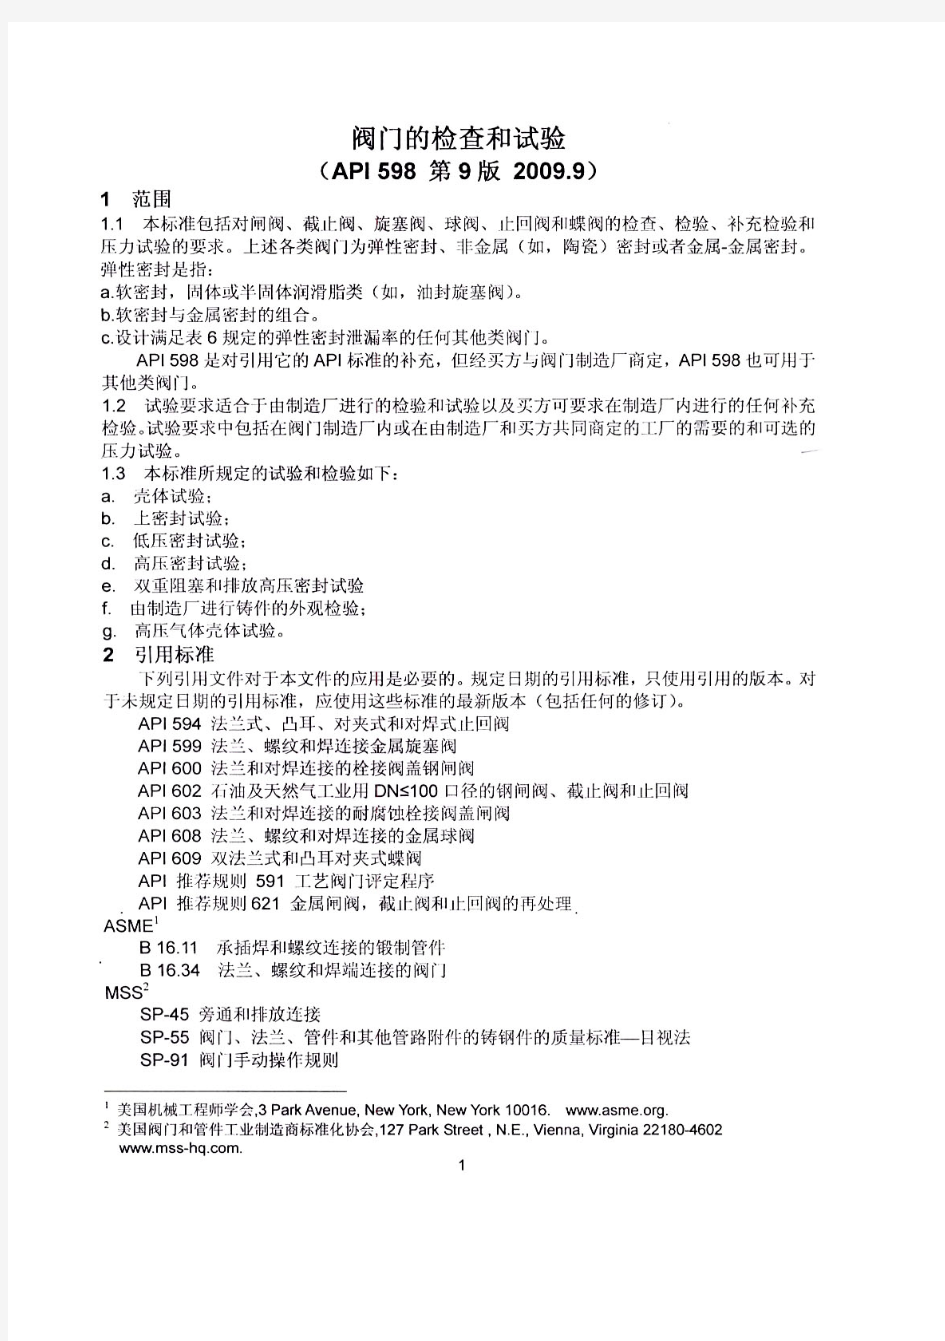 API_598-2009-中文-清晰版